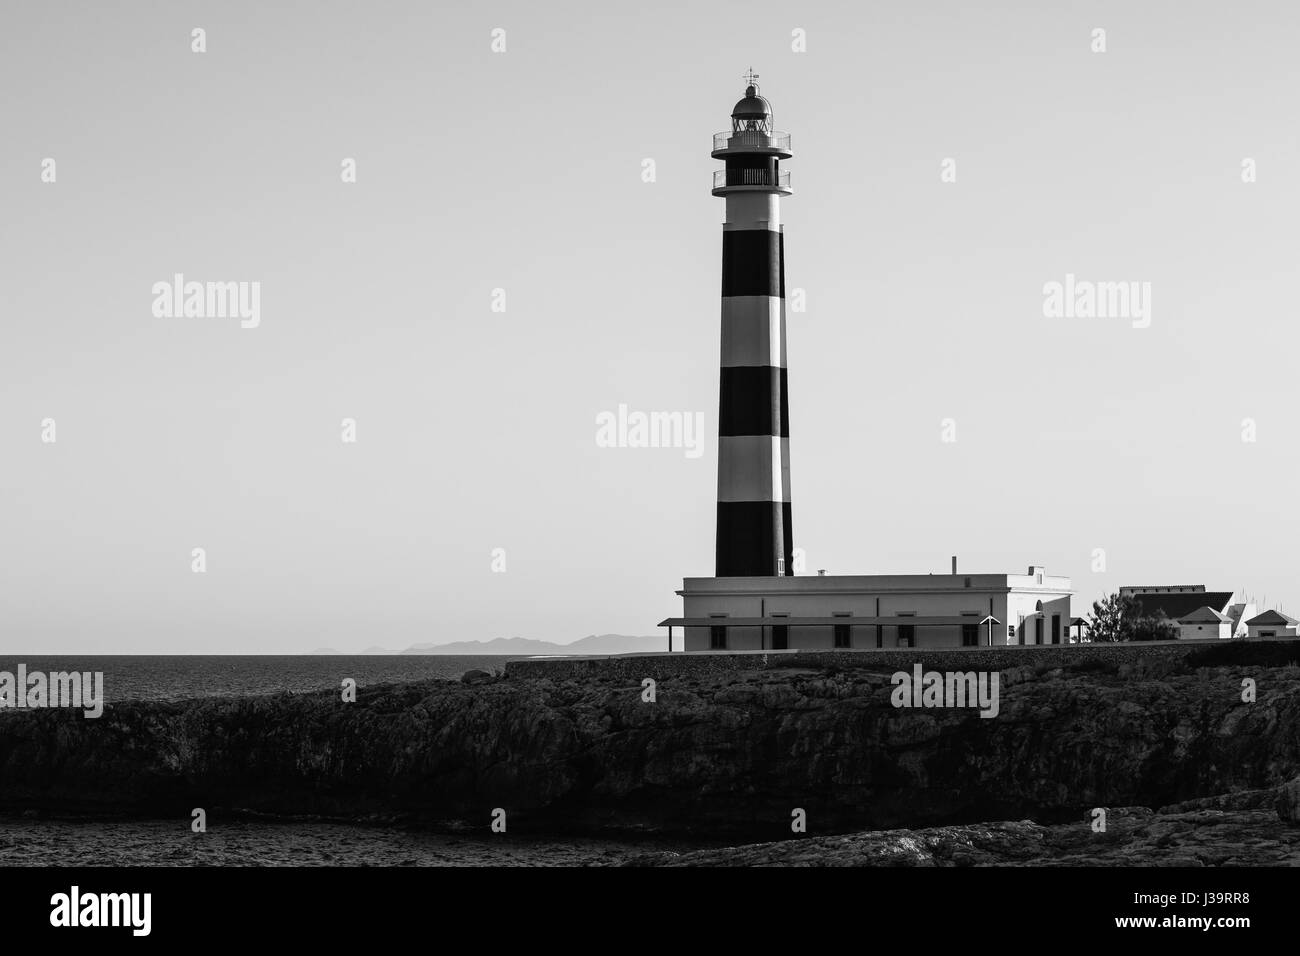 Cap d'Artrutx Lighthouse, Cala'n Bosch, Menorca, Balearics, Spain Stock Photo